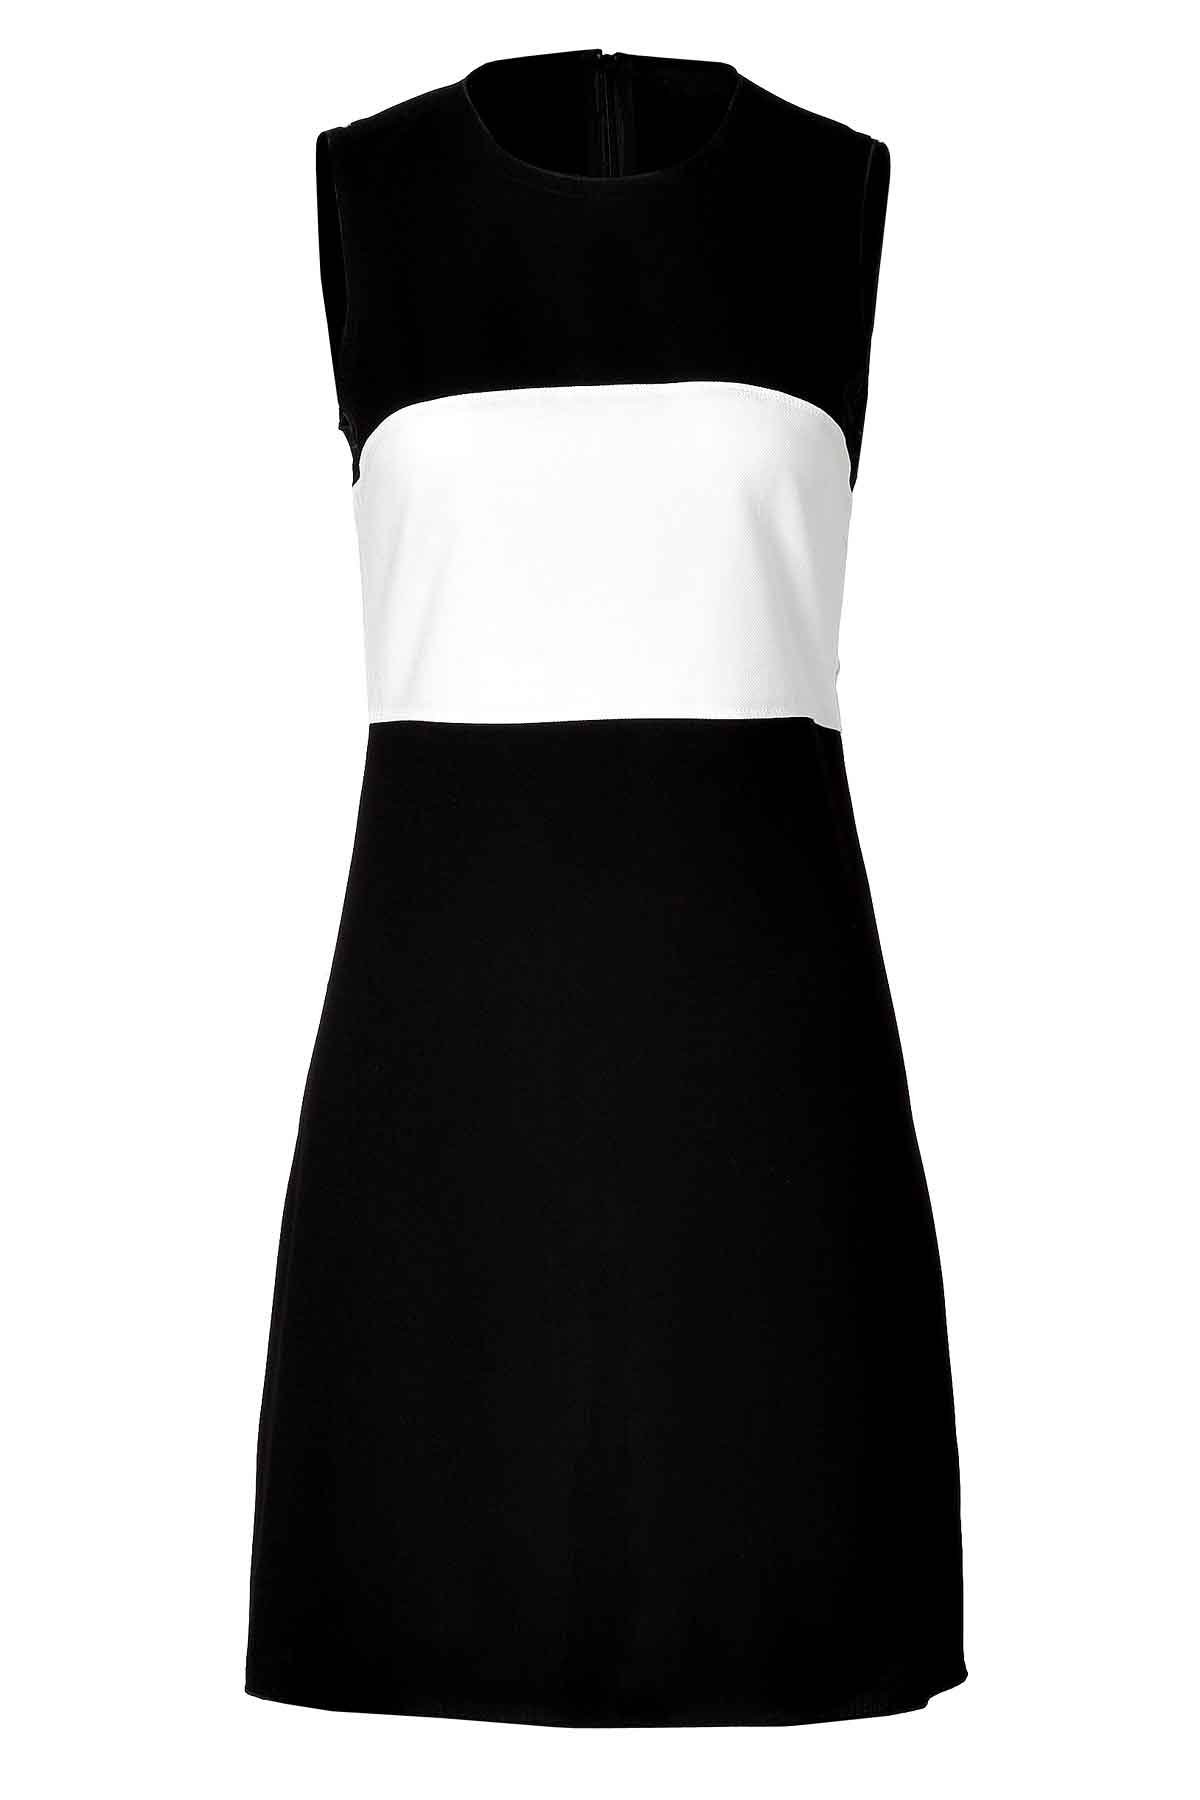 Black and White Wool Blend Dress, Custom Fit, Handmade, Fully Lined ...